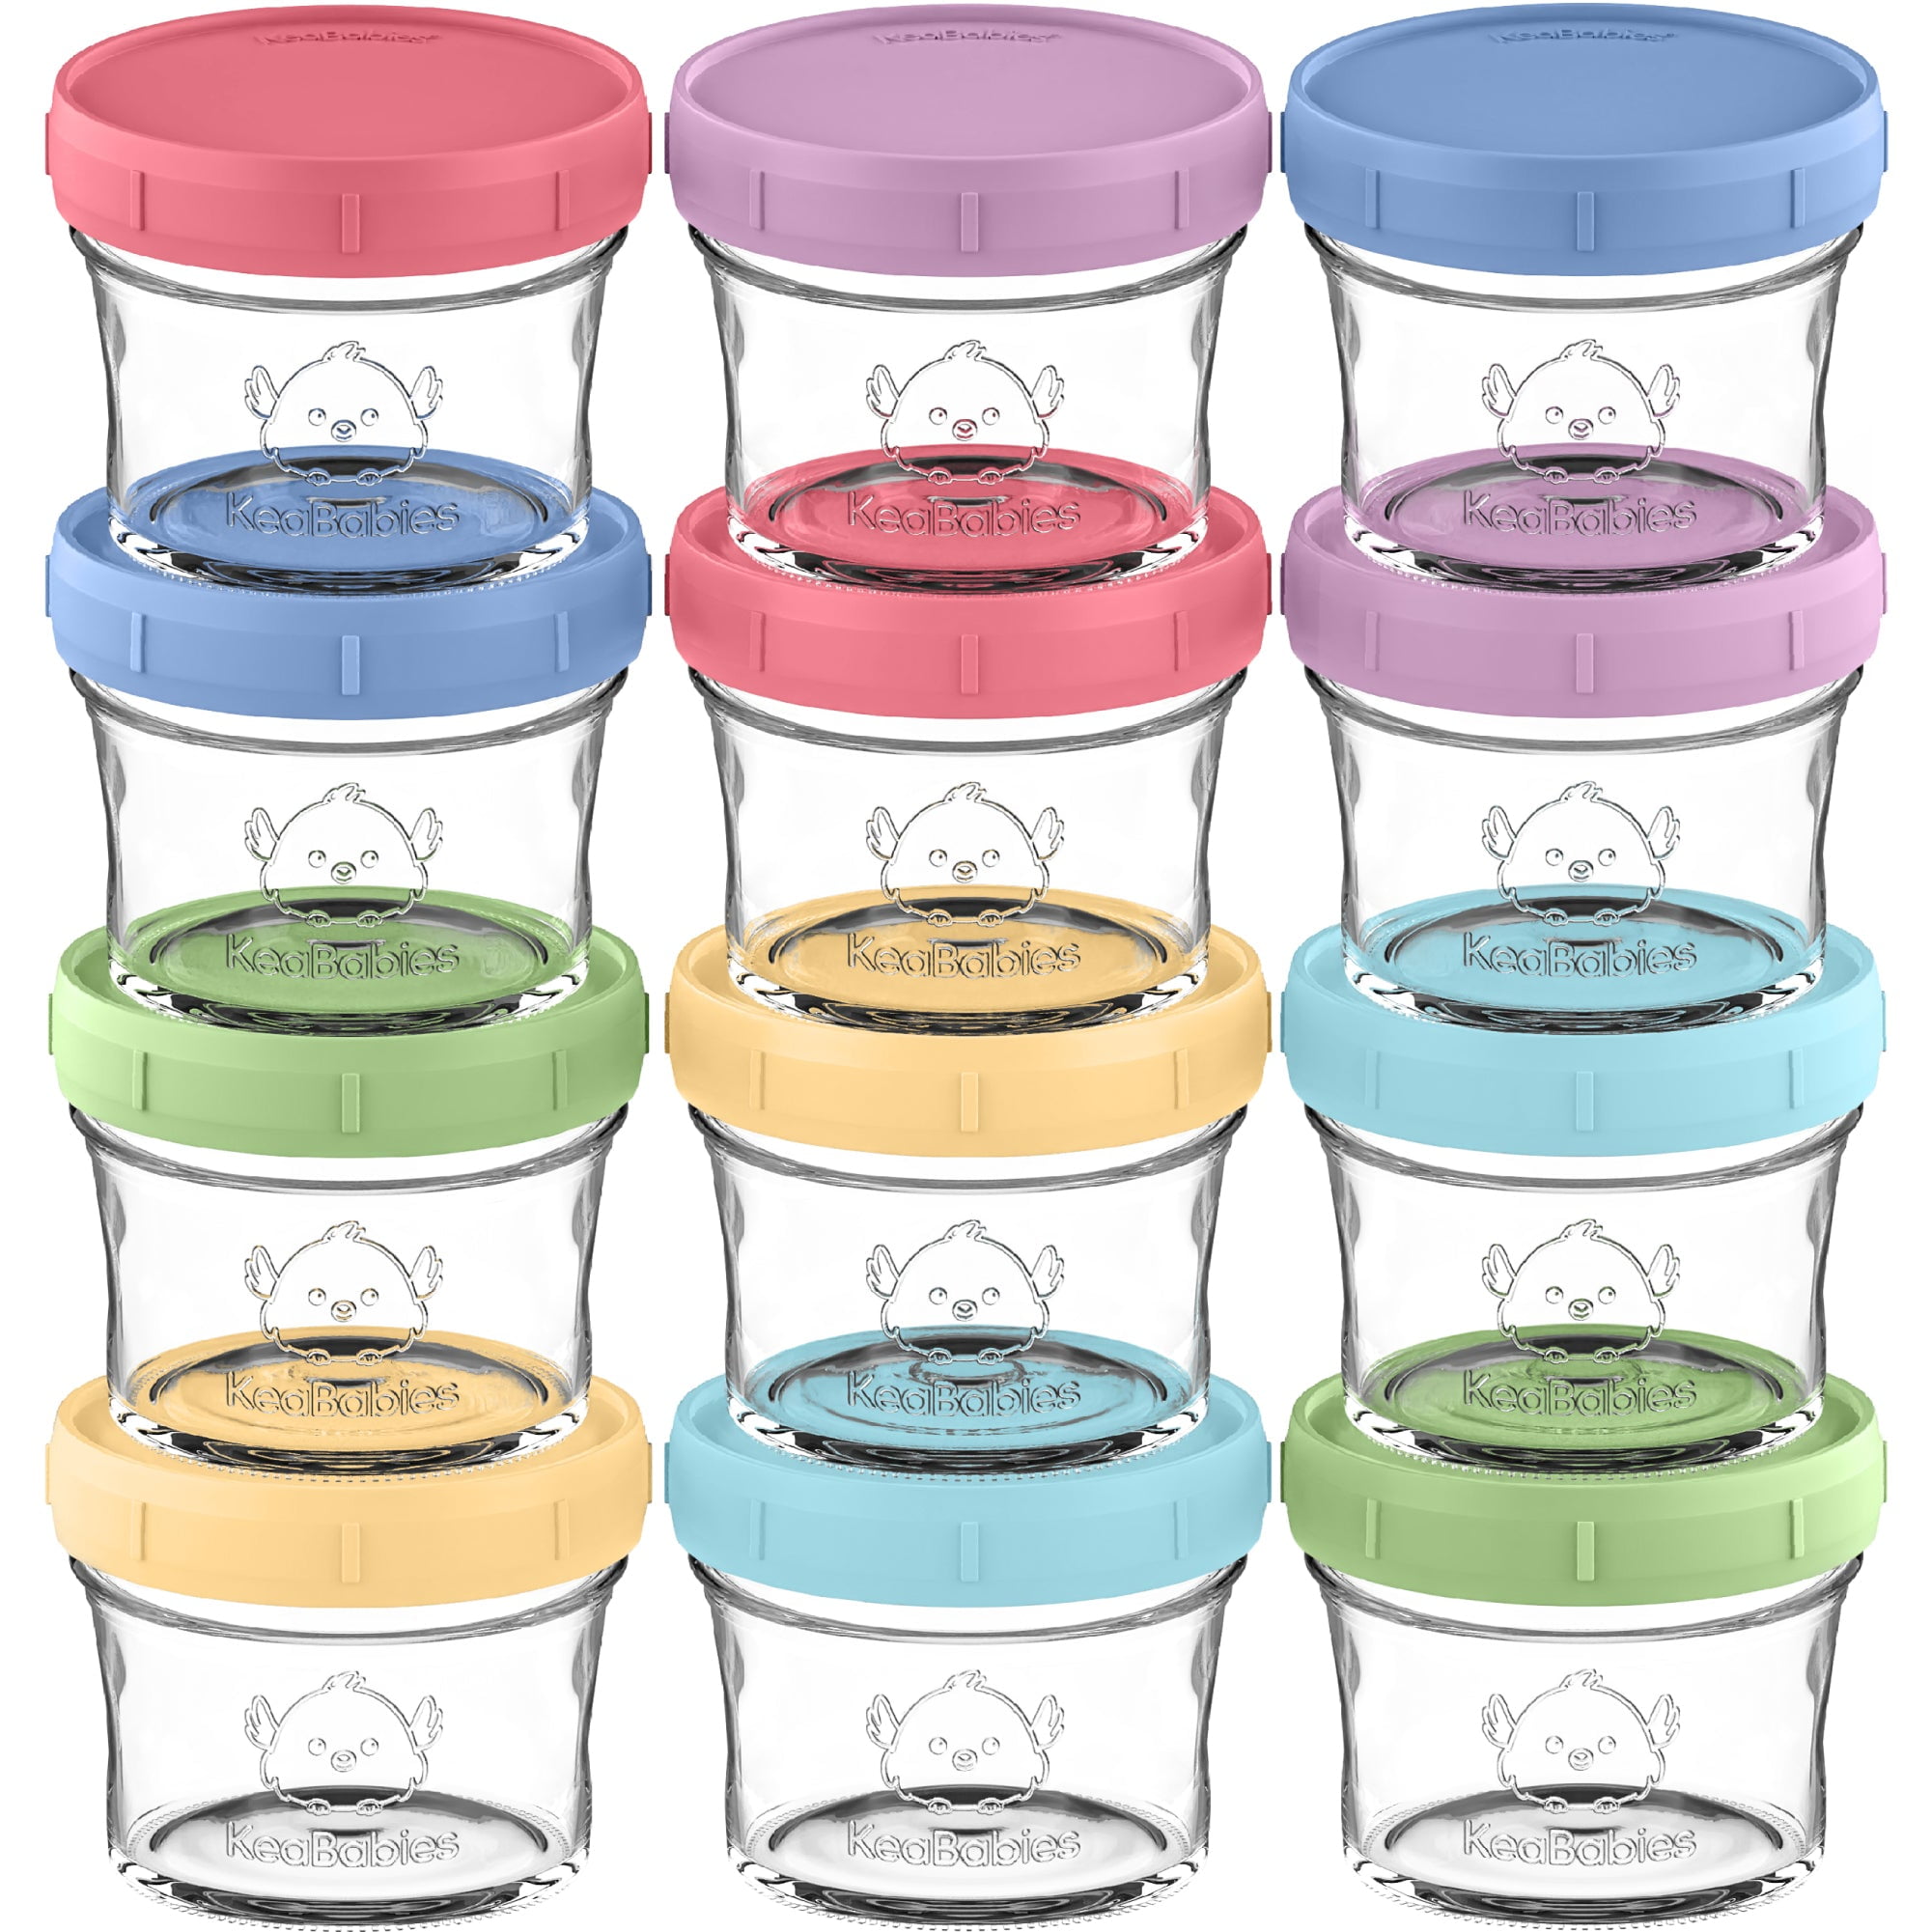 Baby Food Jars - Bulk Storage Pack - Glass